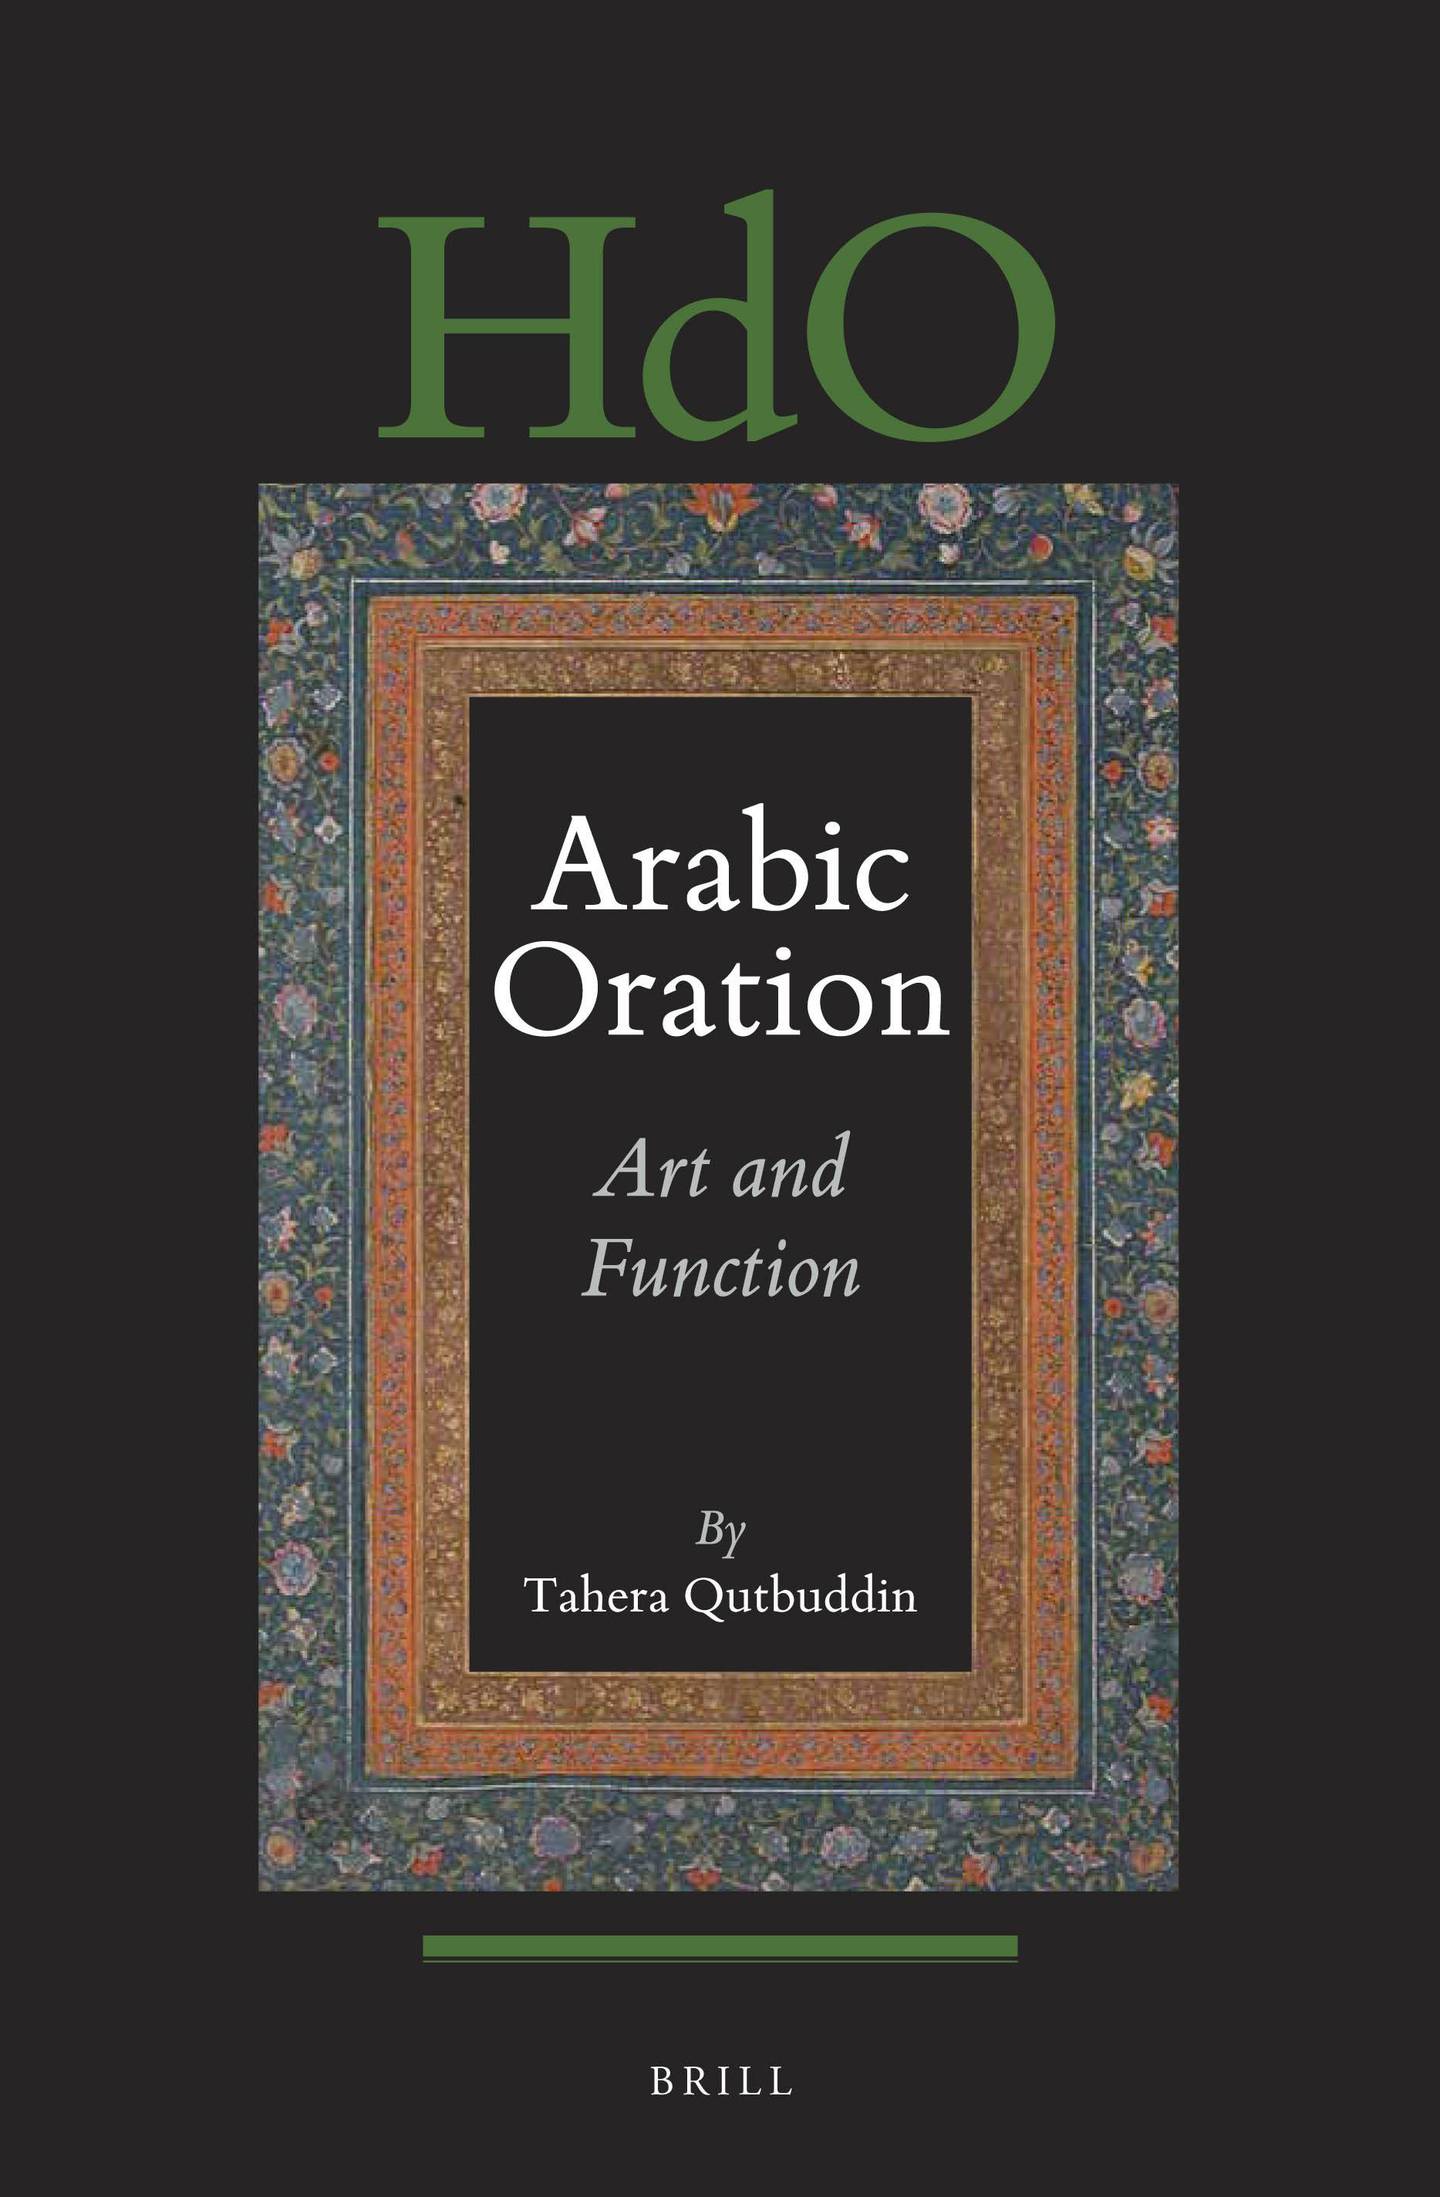 Arabic Oration: Art and Function by Tahera Qutbuddin. Courtesy Brill